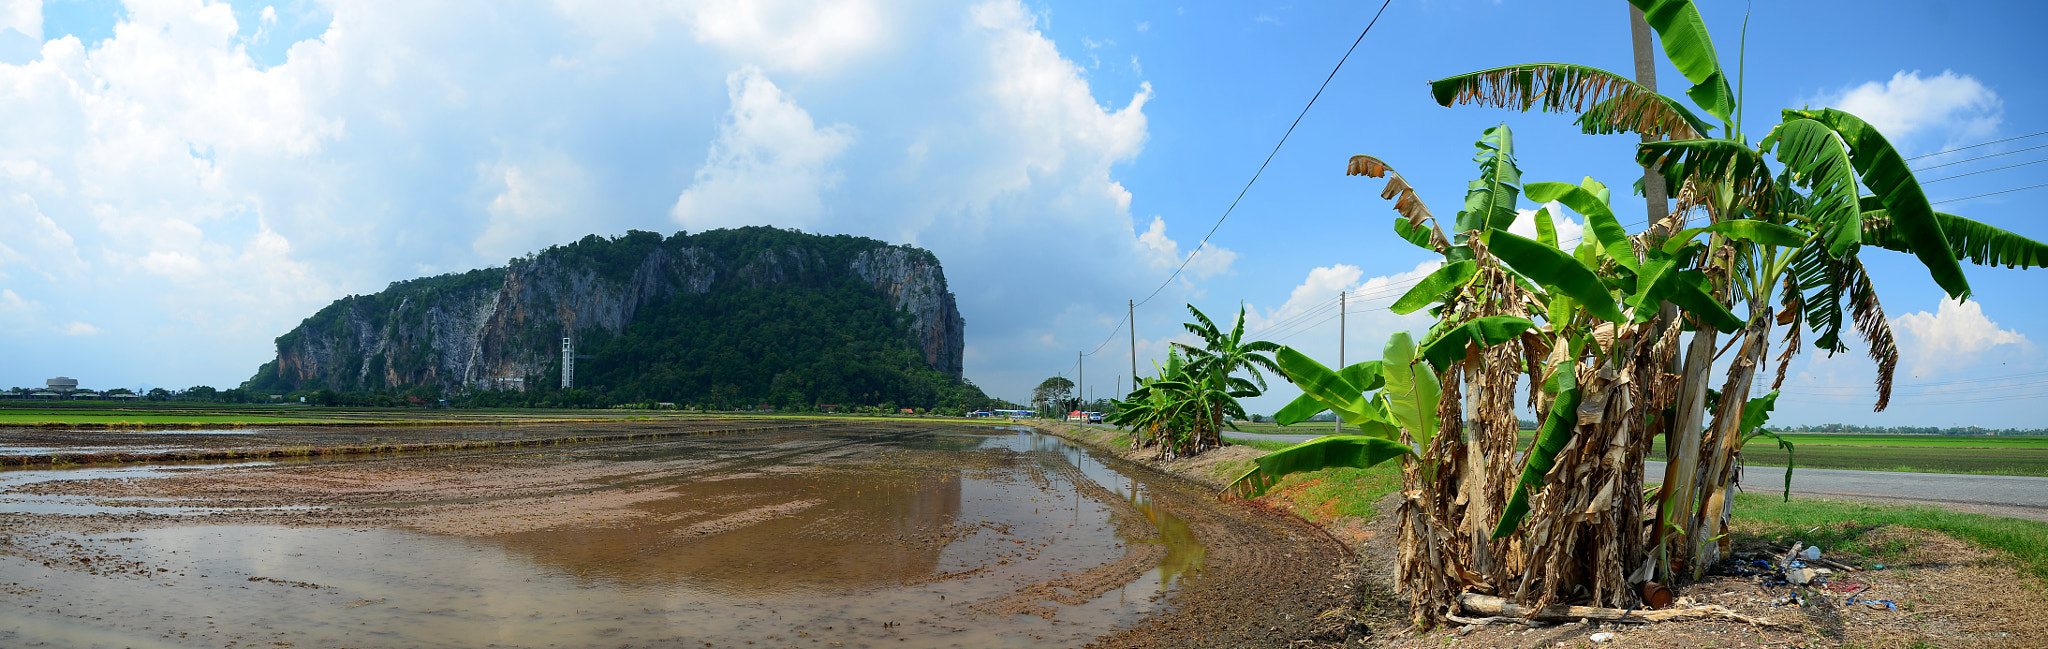 Paddy Field with Gunung Keriang